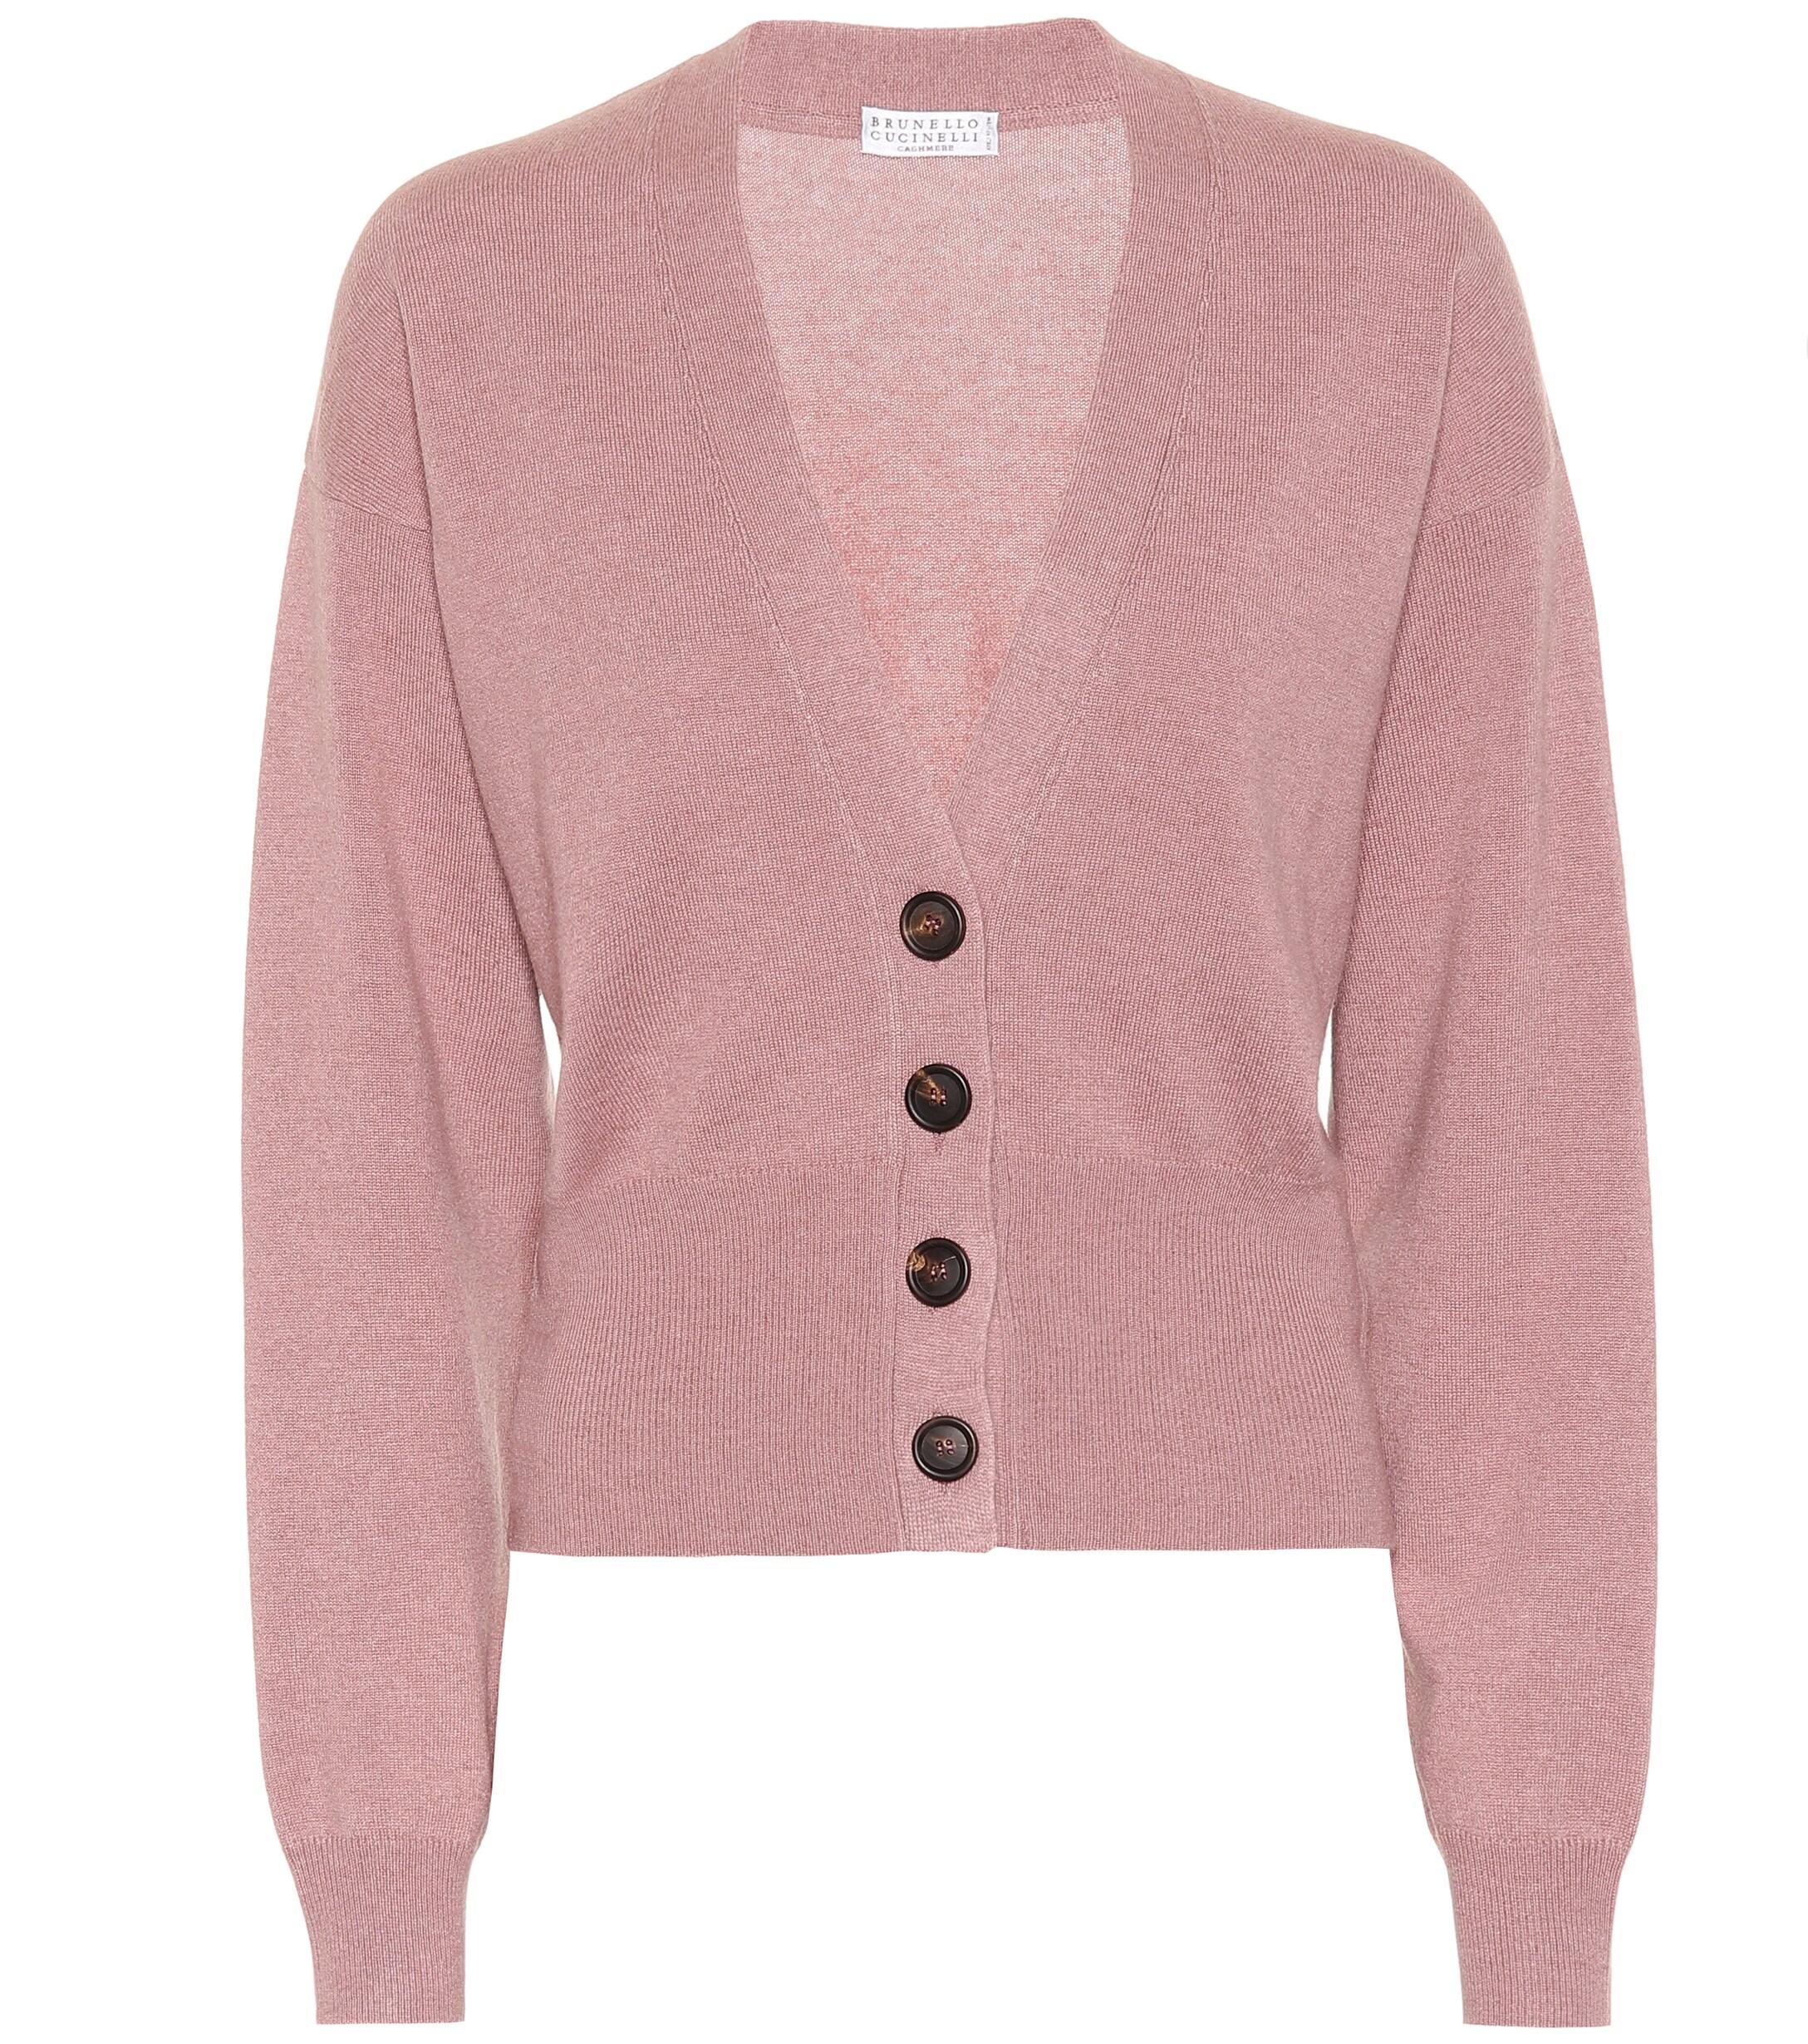 Brunello Cucinelli Cropped Cashmere Cardigan in Pink - Lyst